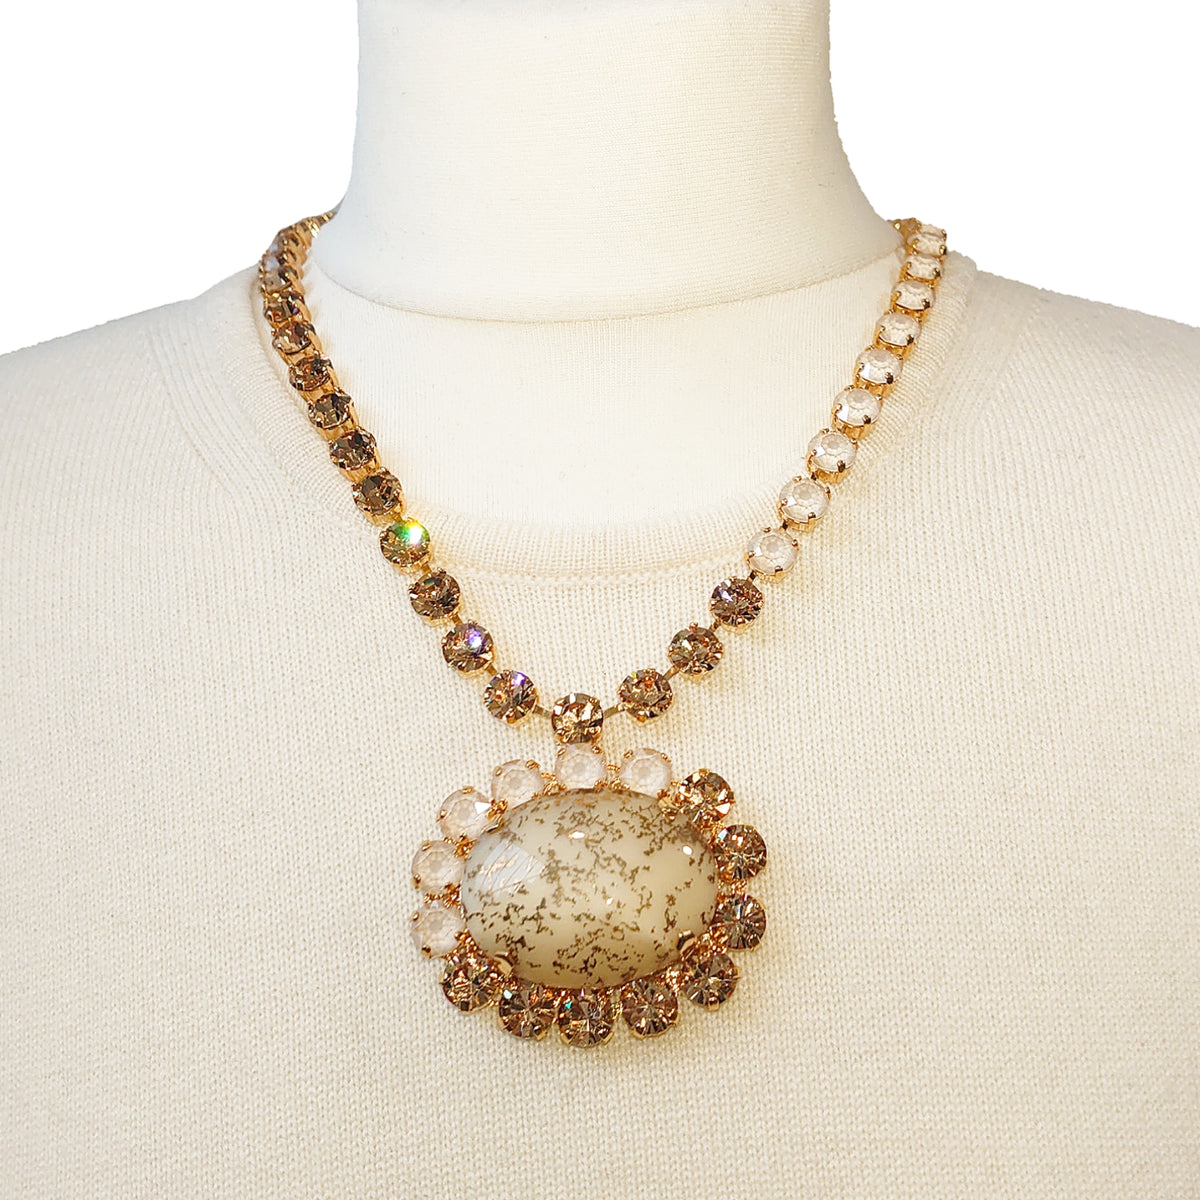 Bespoke Swarovski Crystals Necklace with Vintage Precious Stone - Cream